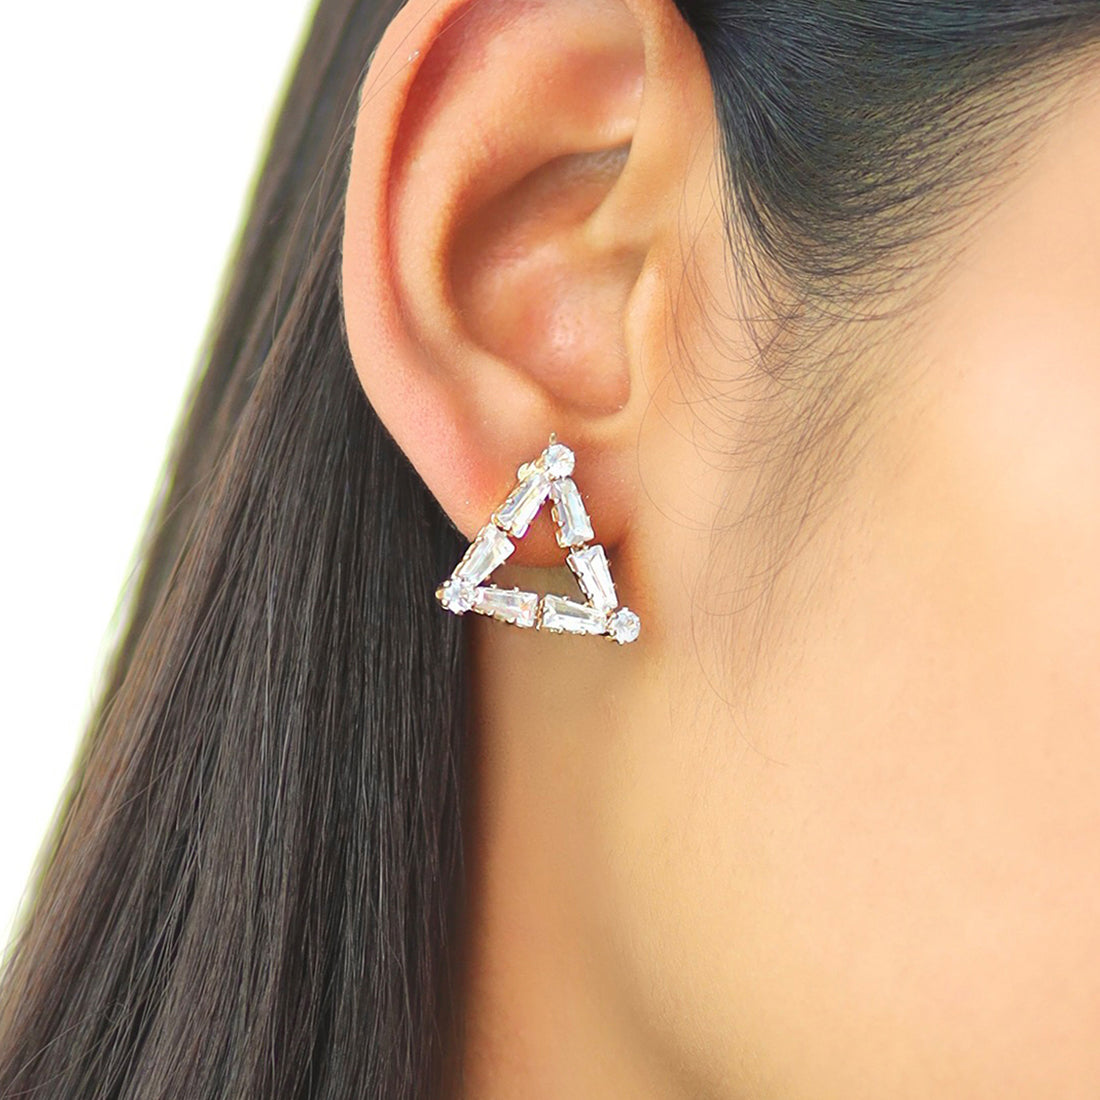 Rhinestone Studded Triangular Gold-Toned Stud Earrings